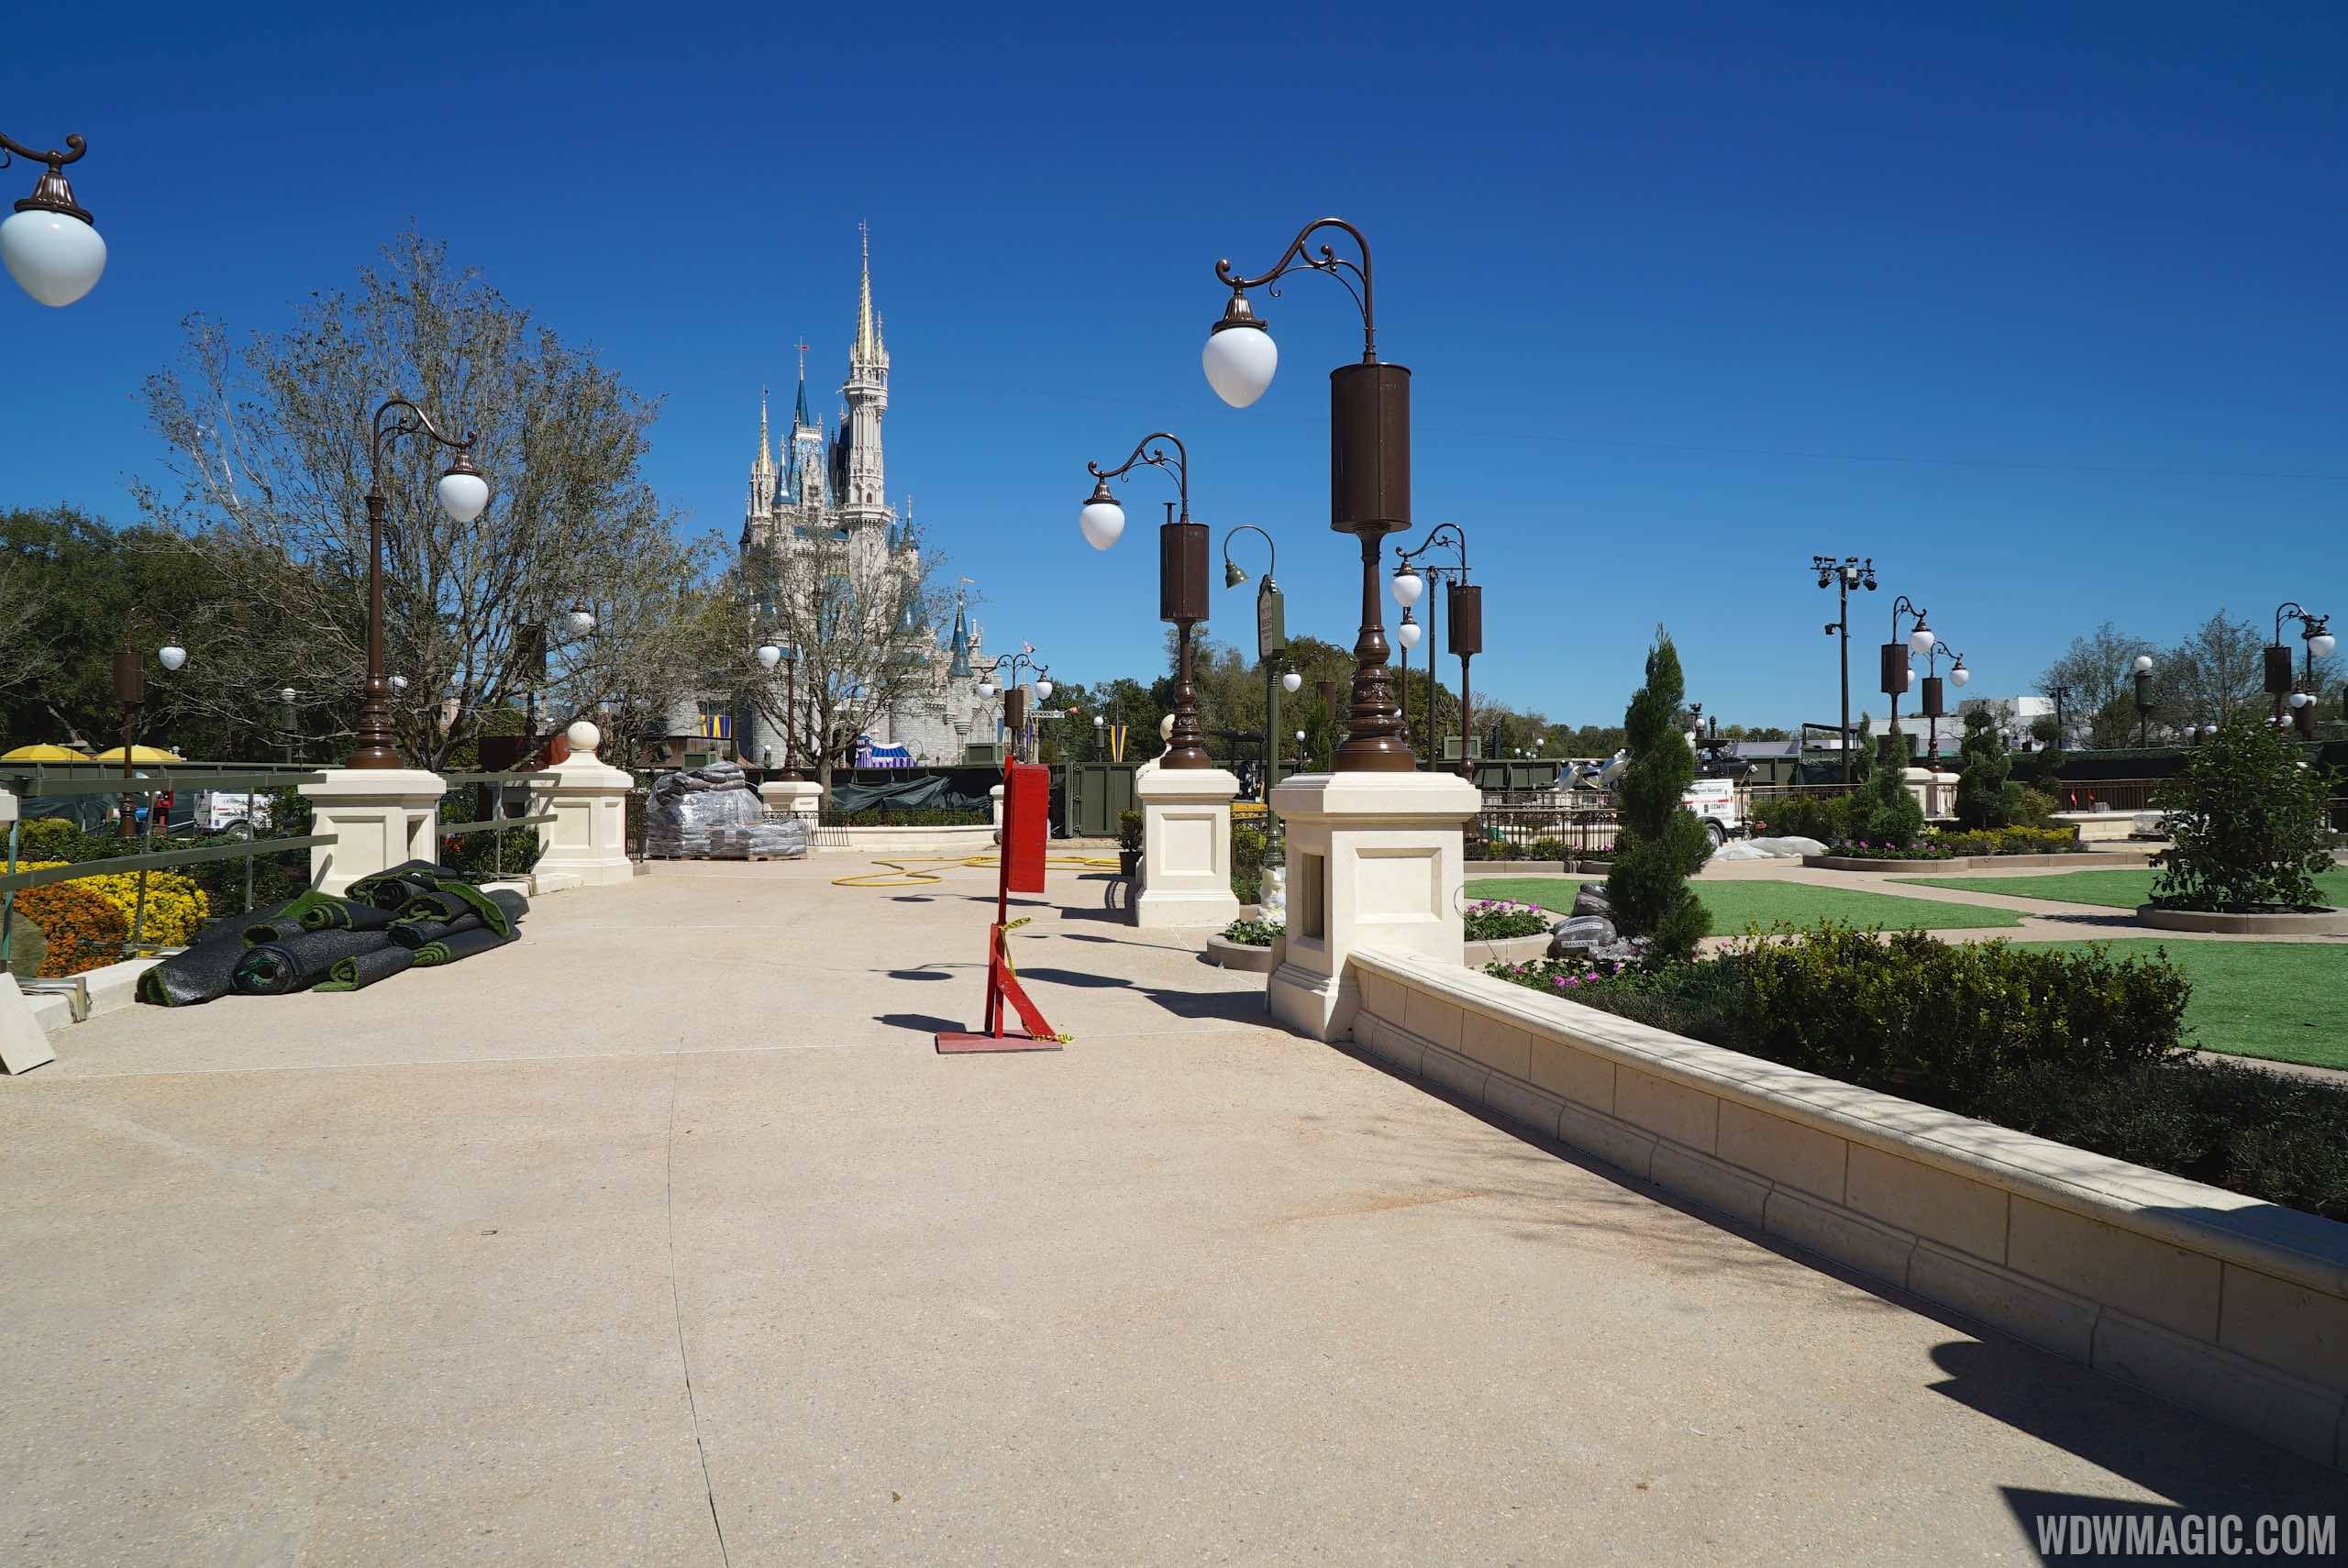 PHOTOS - Latest look at the Magic Kingdom's Main Street Plaza Gardens construction